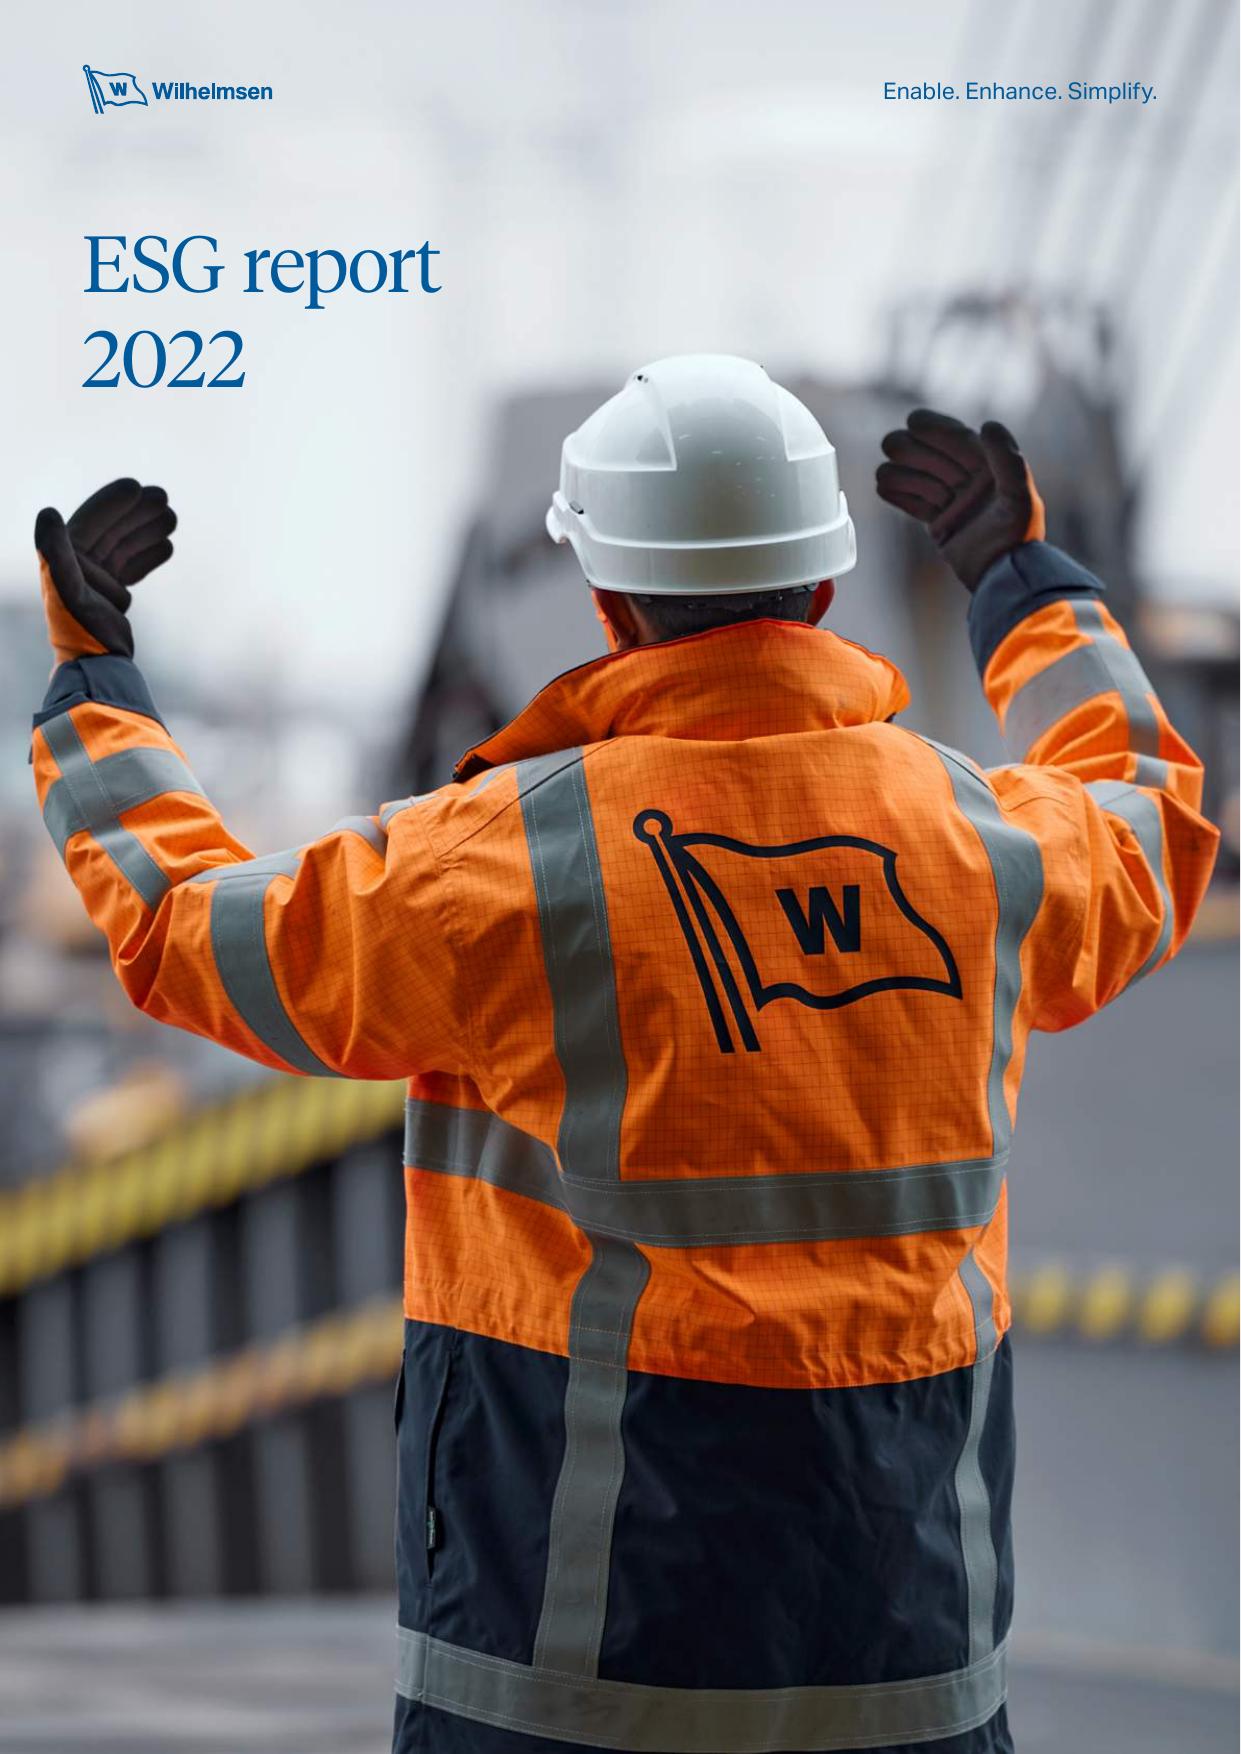 WILHELMSEN 2022 Annual Report